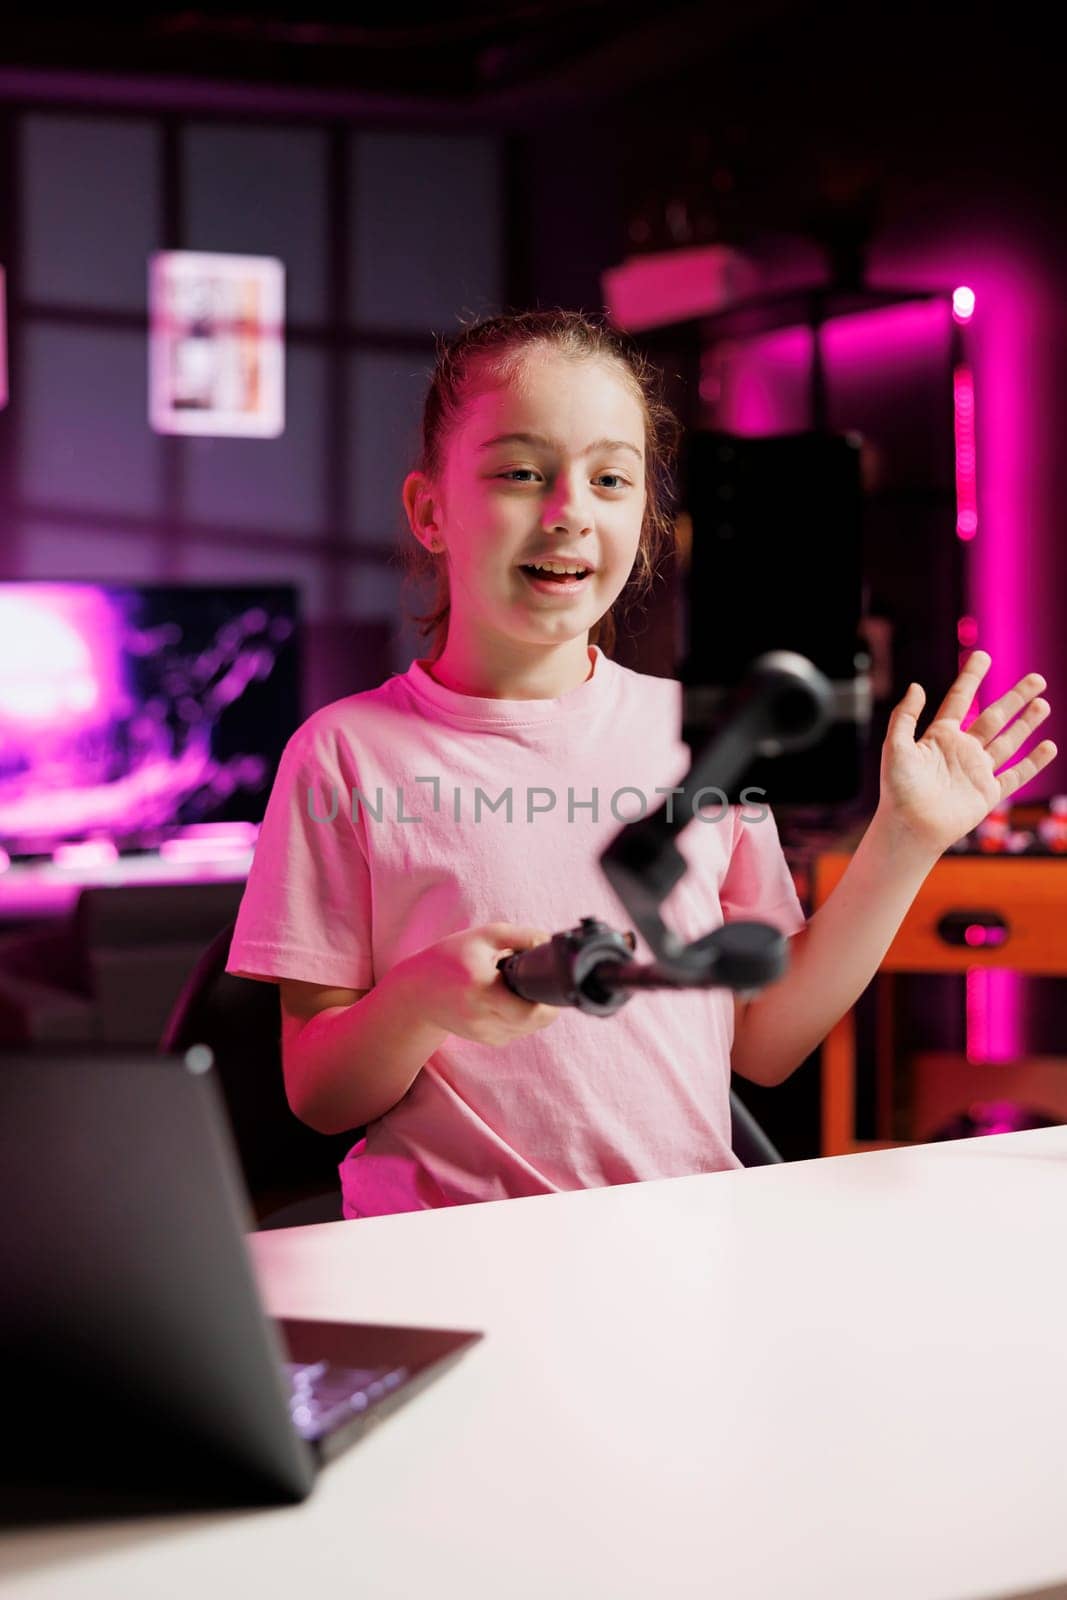 Joyful generation Z influencer in pink neon home welcomes devoted children fan community by DCStudio